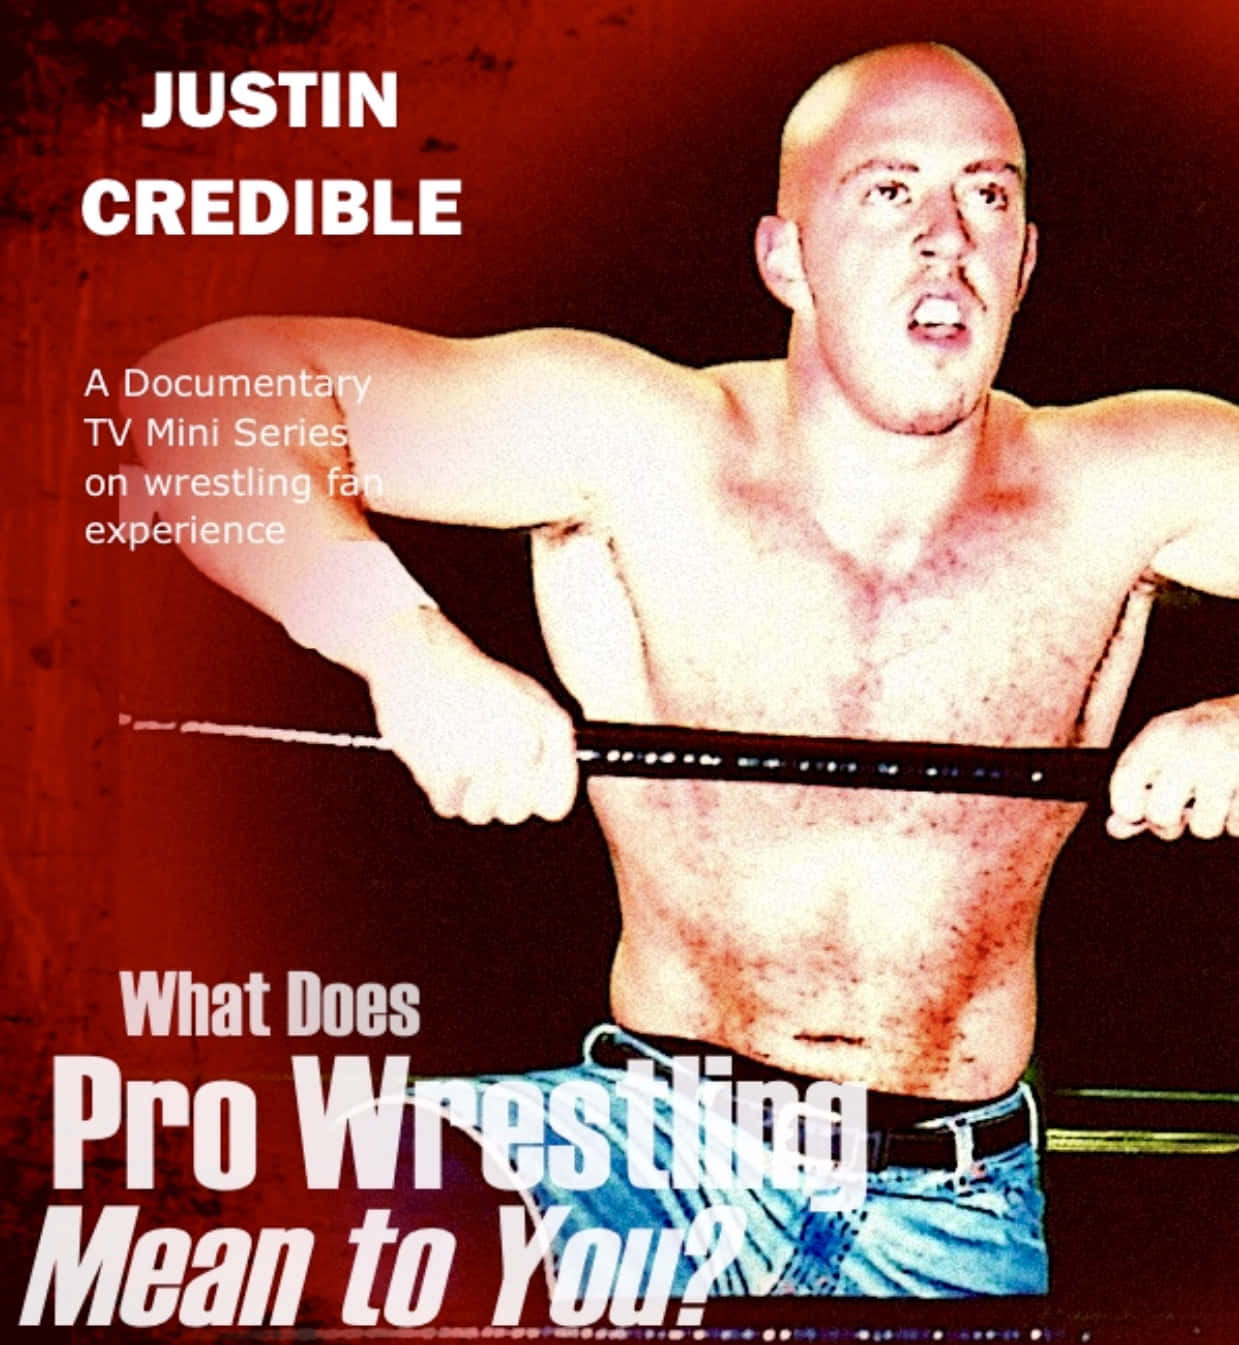 WWE's Superstar Justin Credible Smashing Records - Wrestler Magazine Cover Wallpaper